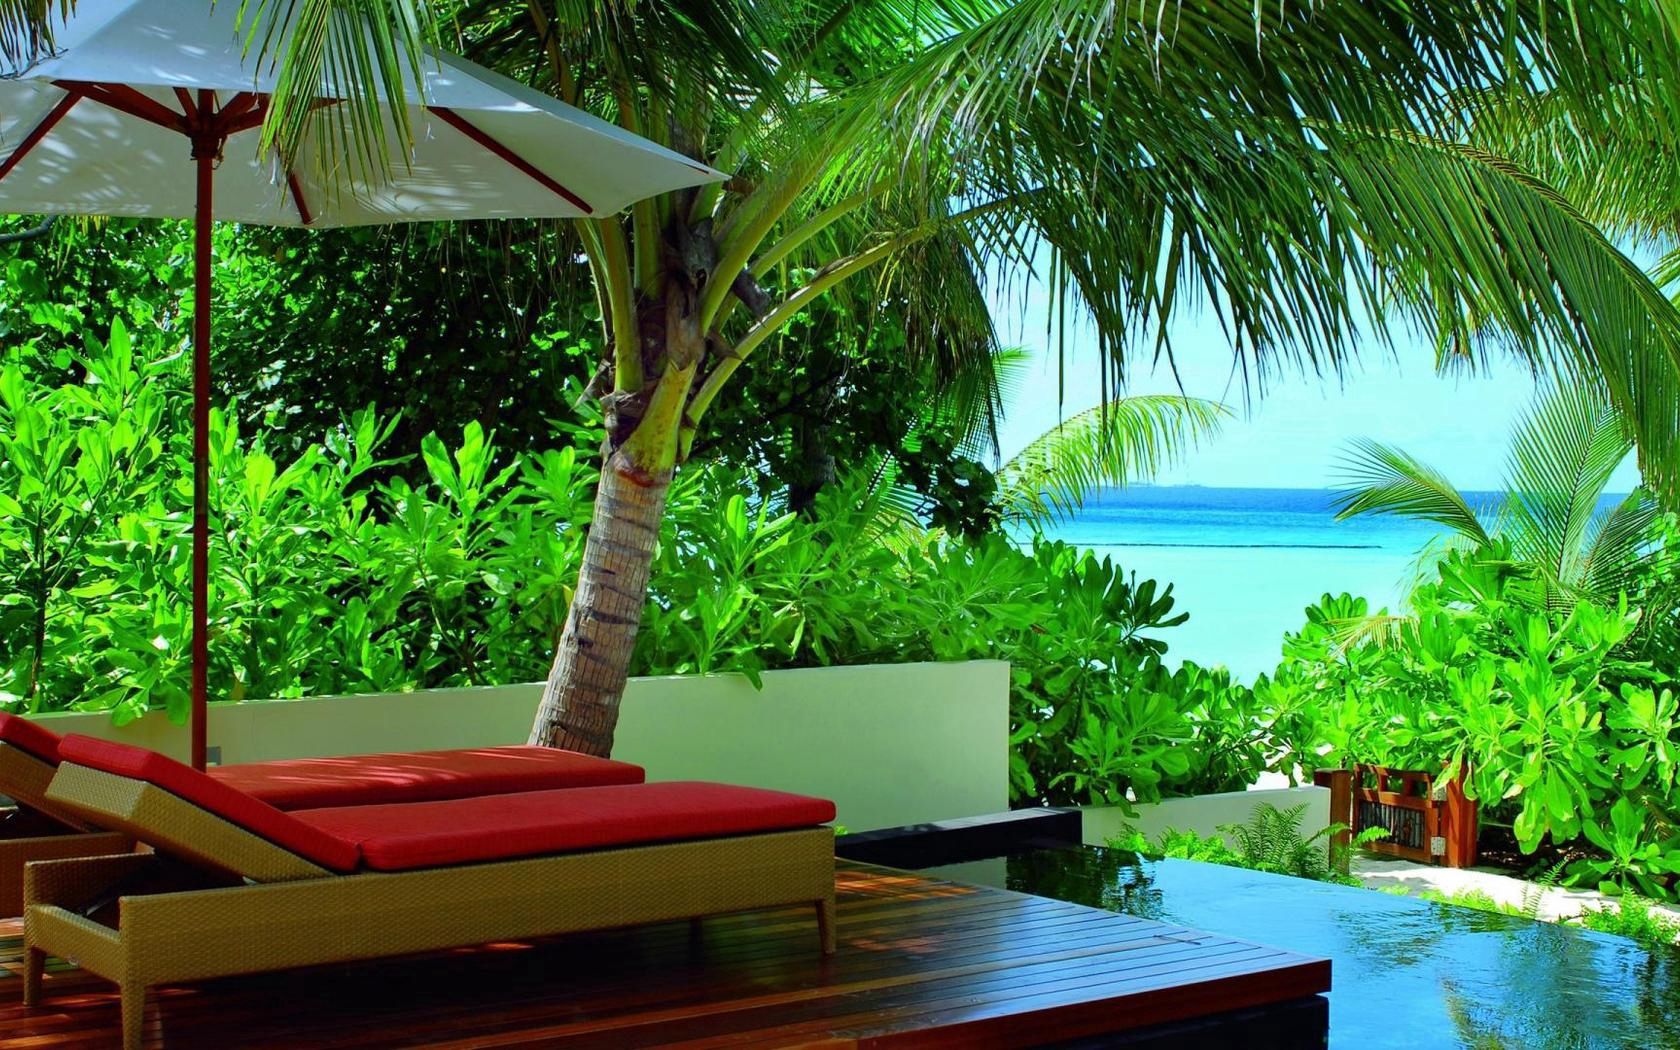 resort, maldives, chairs, nature, palms, vegetation, greens, tropics, sun lounger, deck chair, armchairs